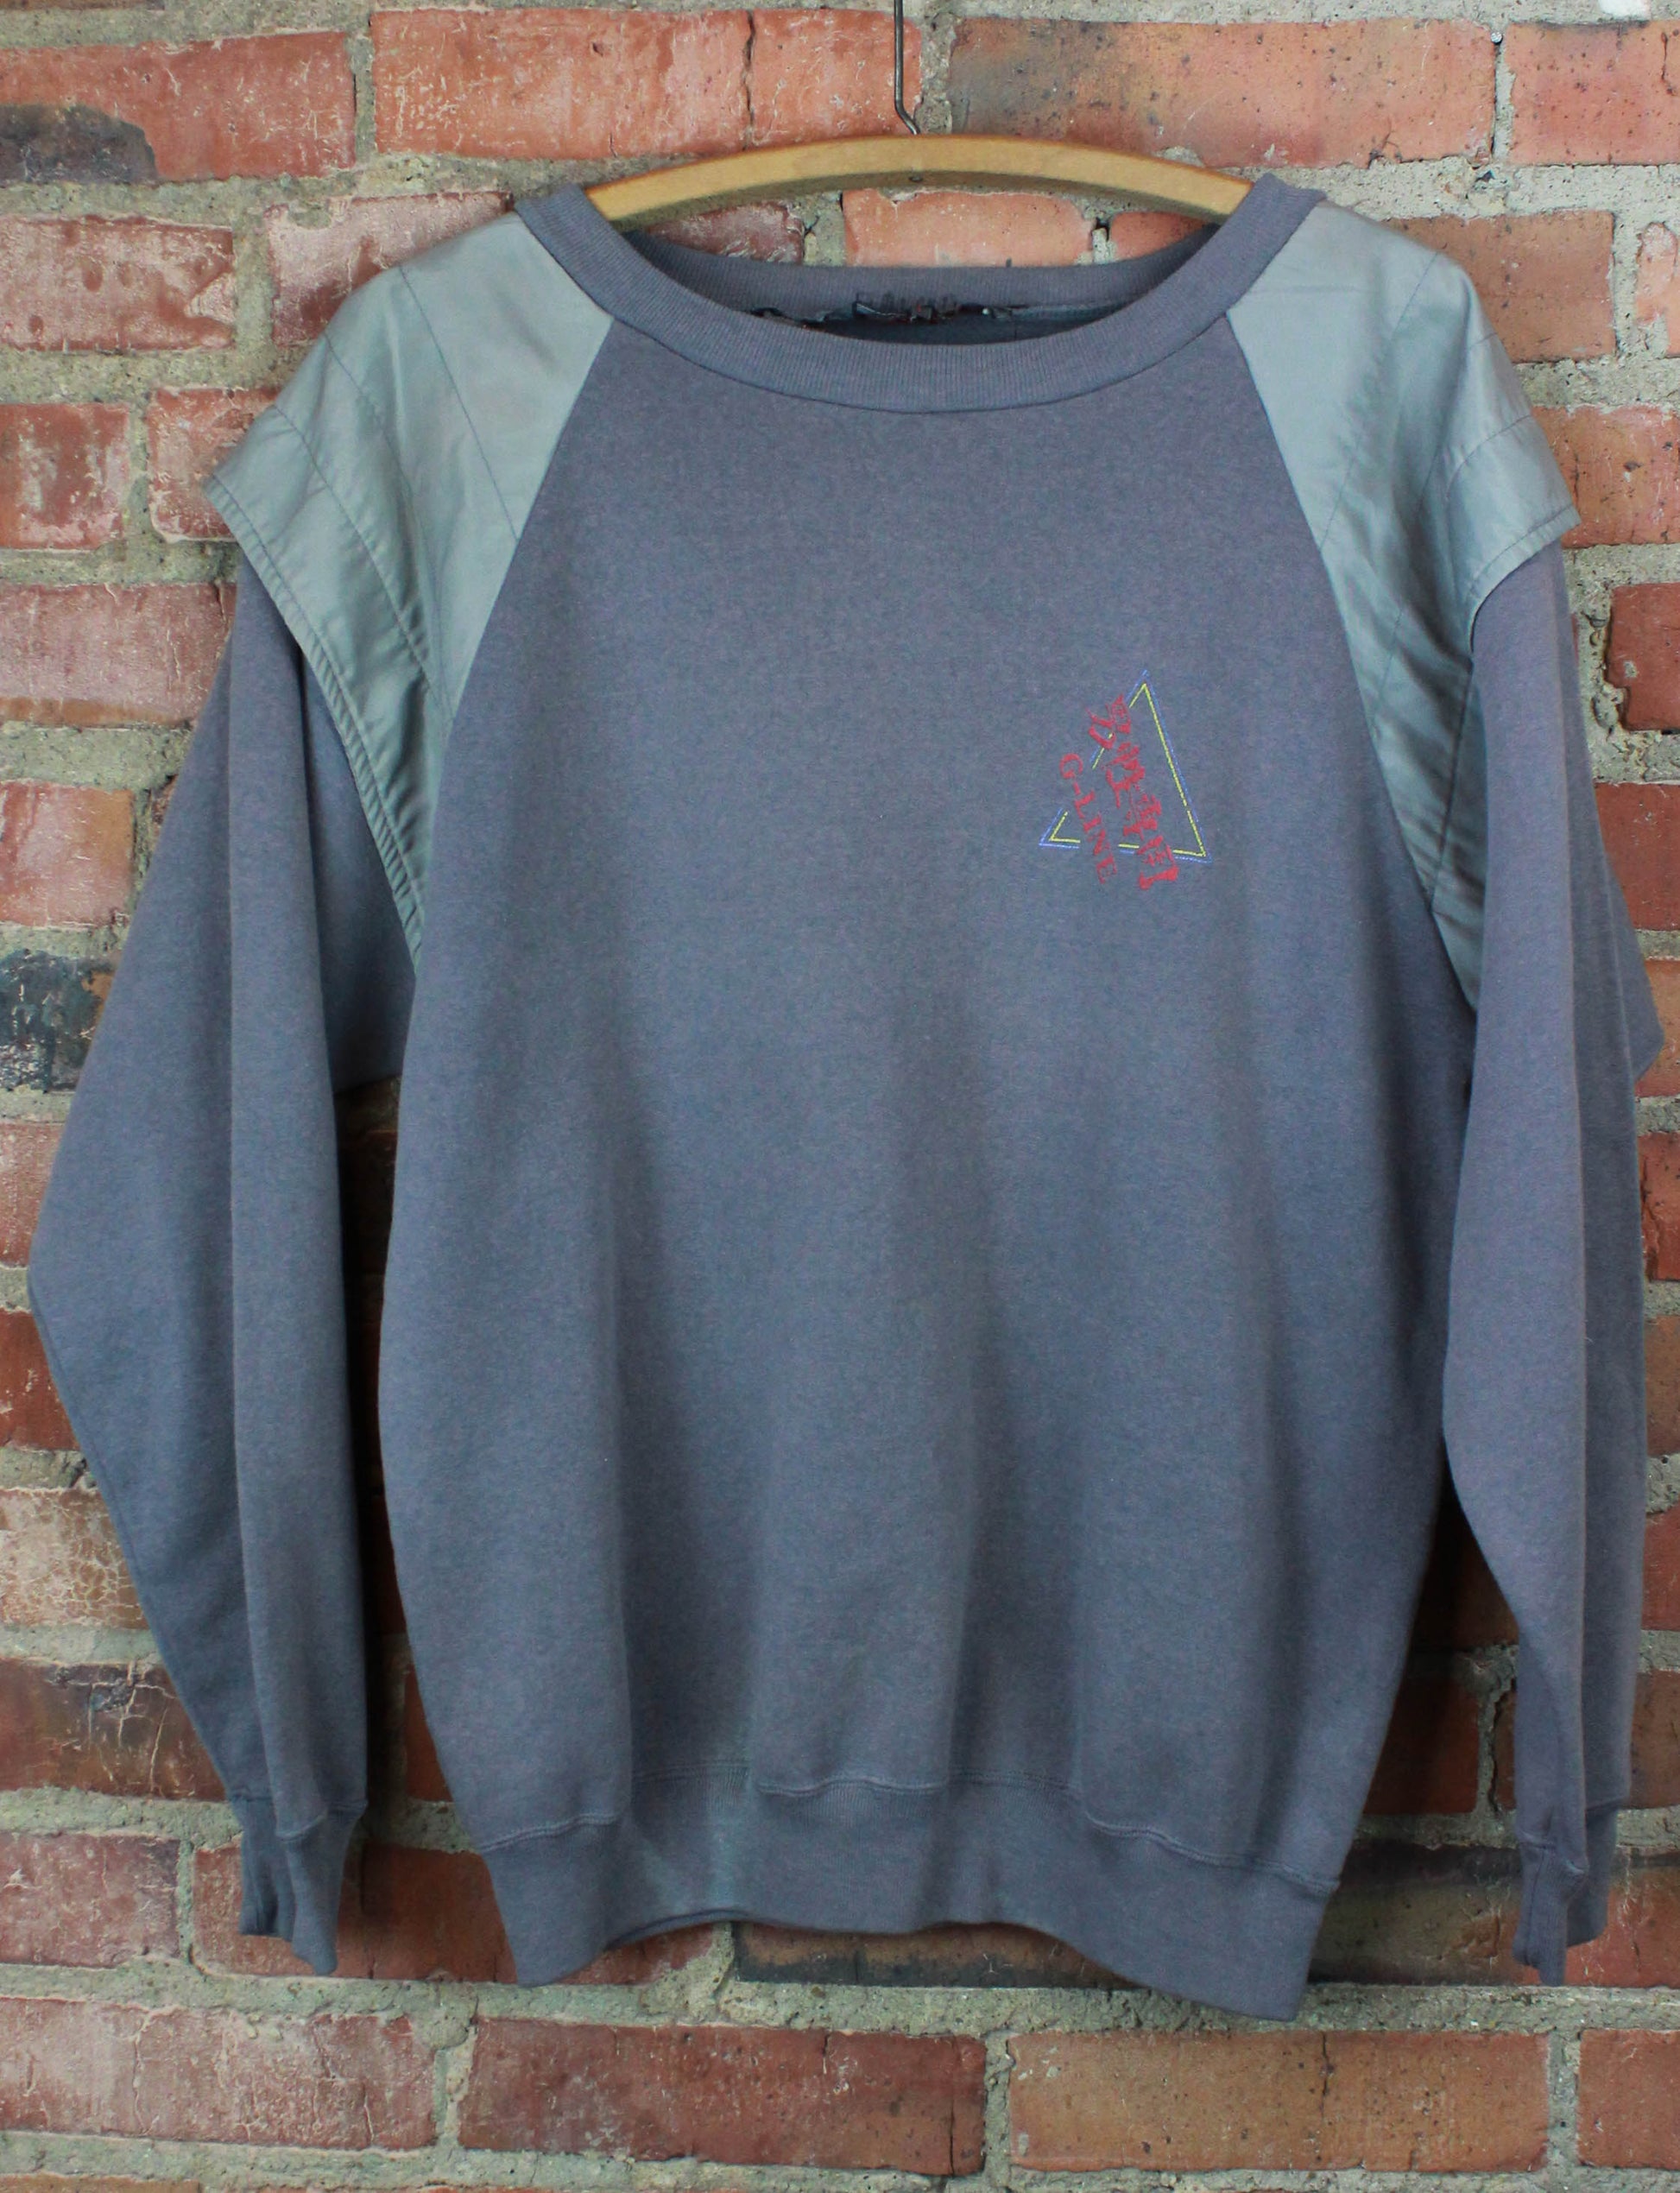 Vintage 80's G-Line Graphic Sweatshirt Crew Neck Pullover Embellished Grey Unisex Large/XL